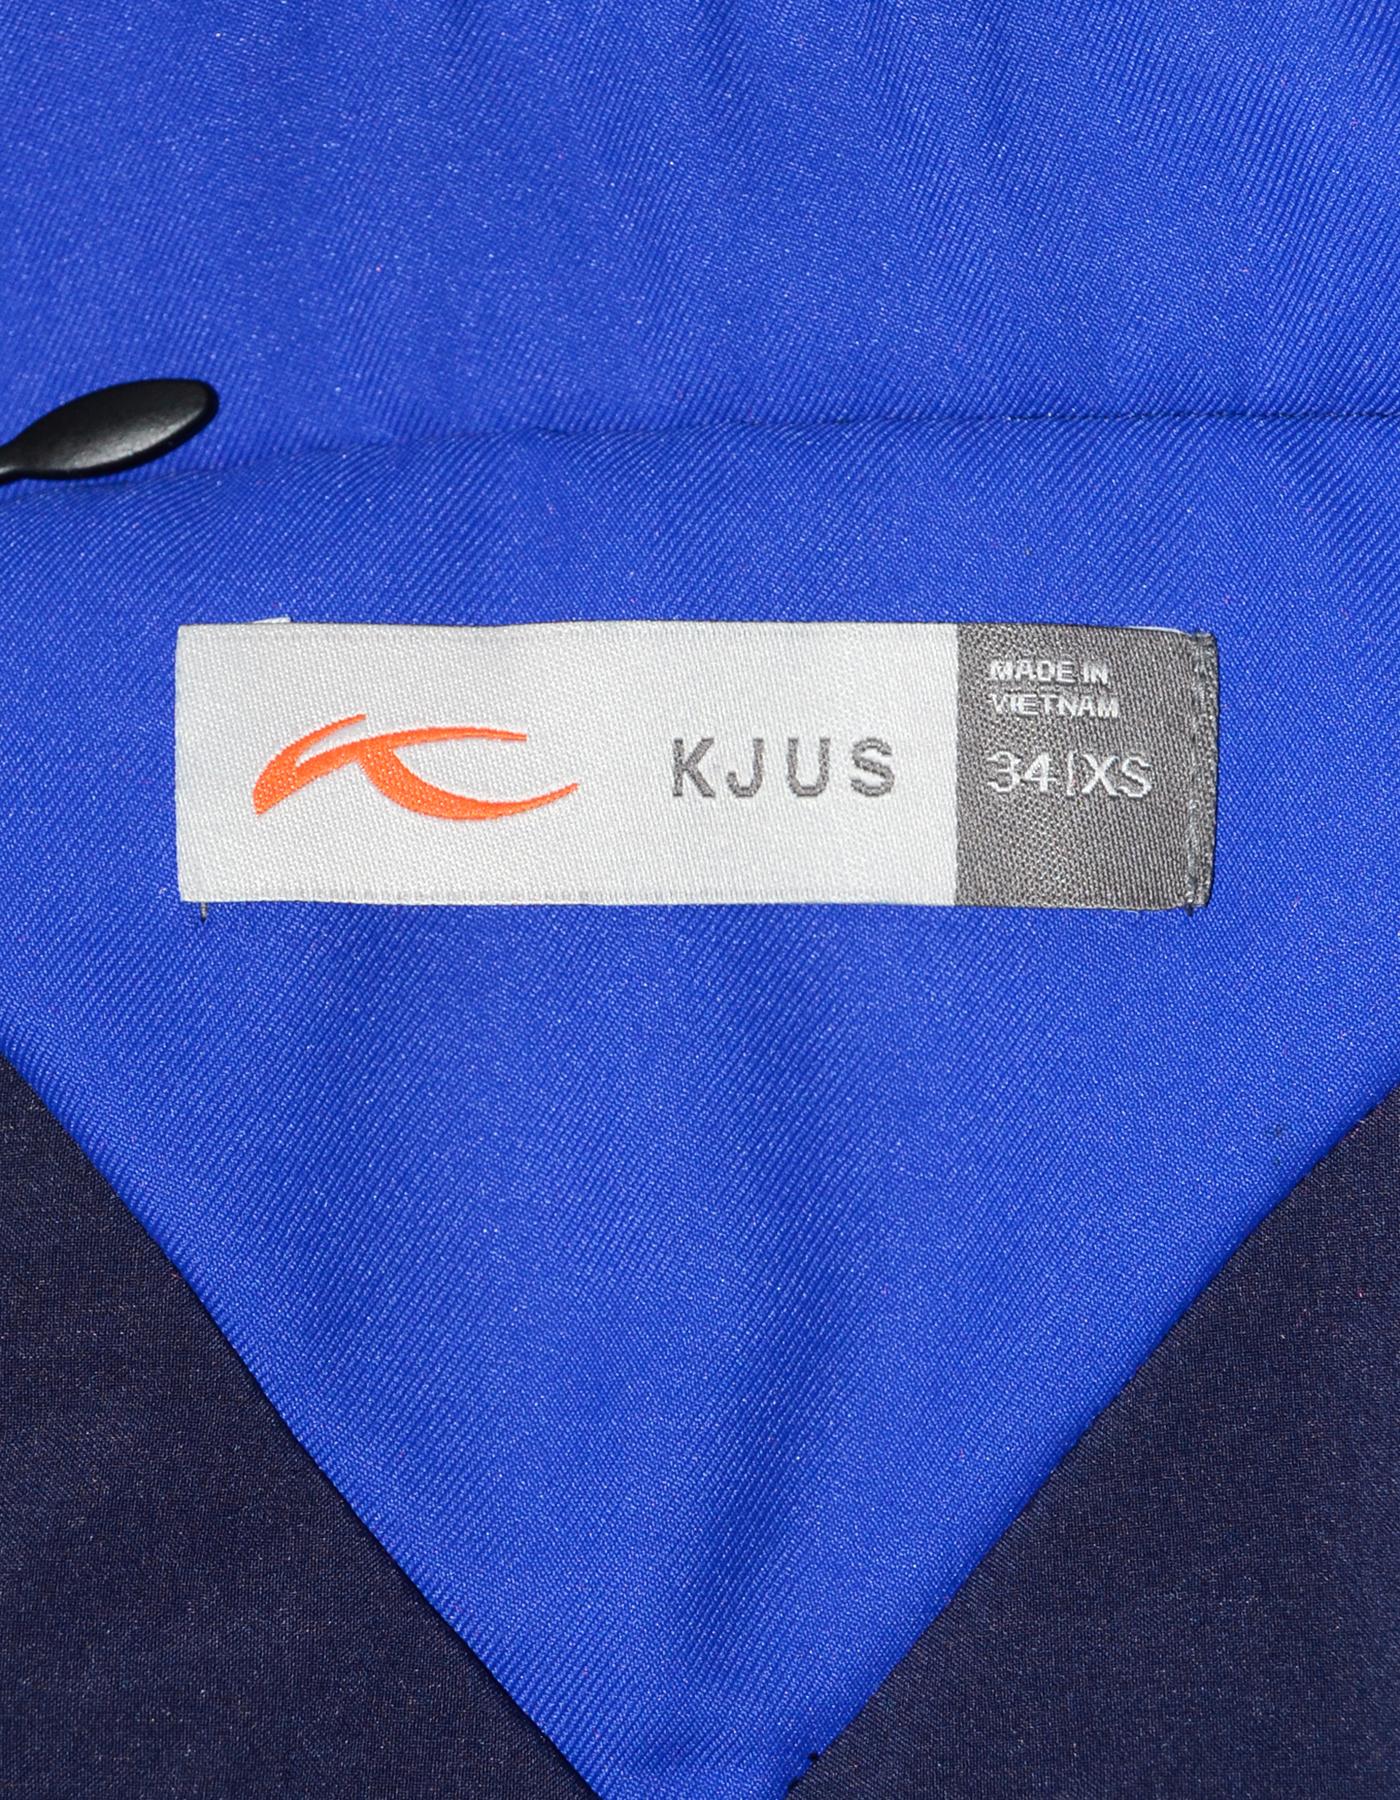 KJUS Blue Ski Jacket W/ Removable Hood Sz XS 1